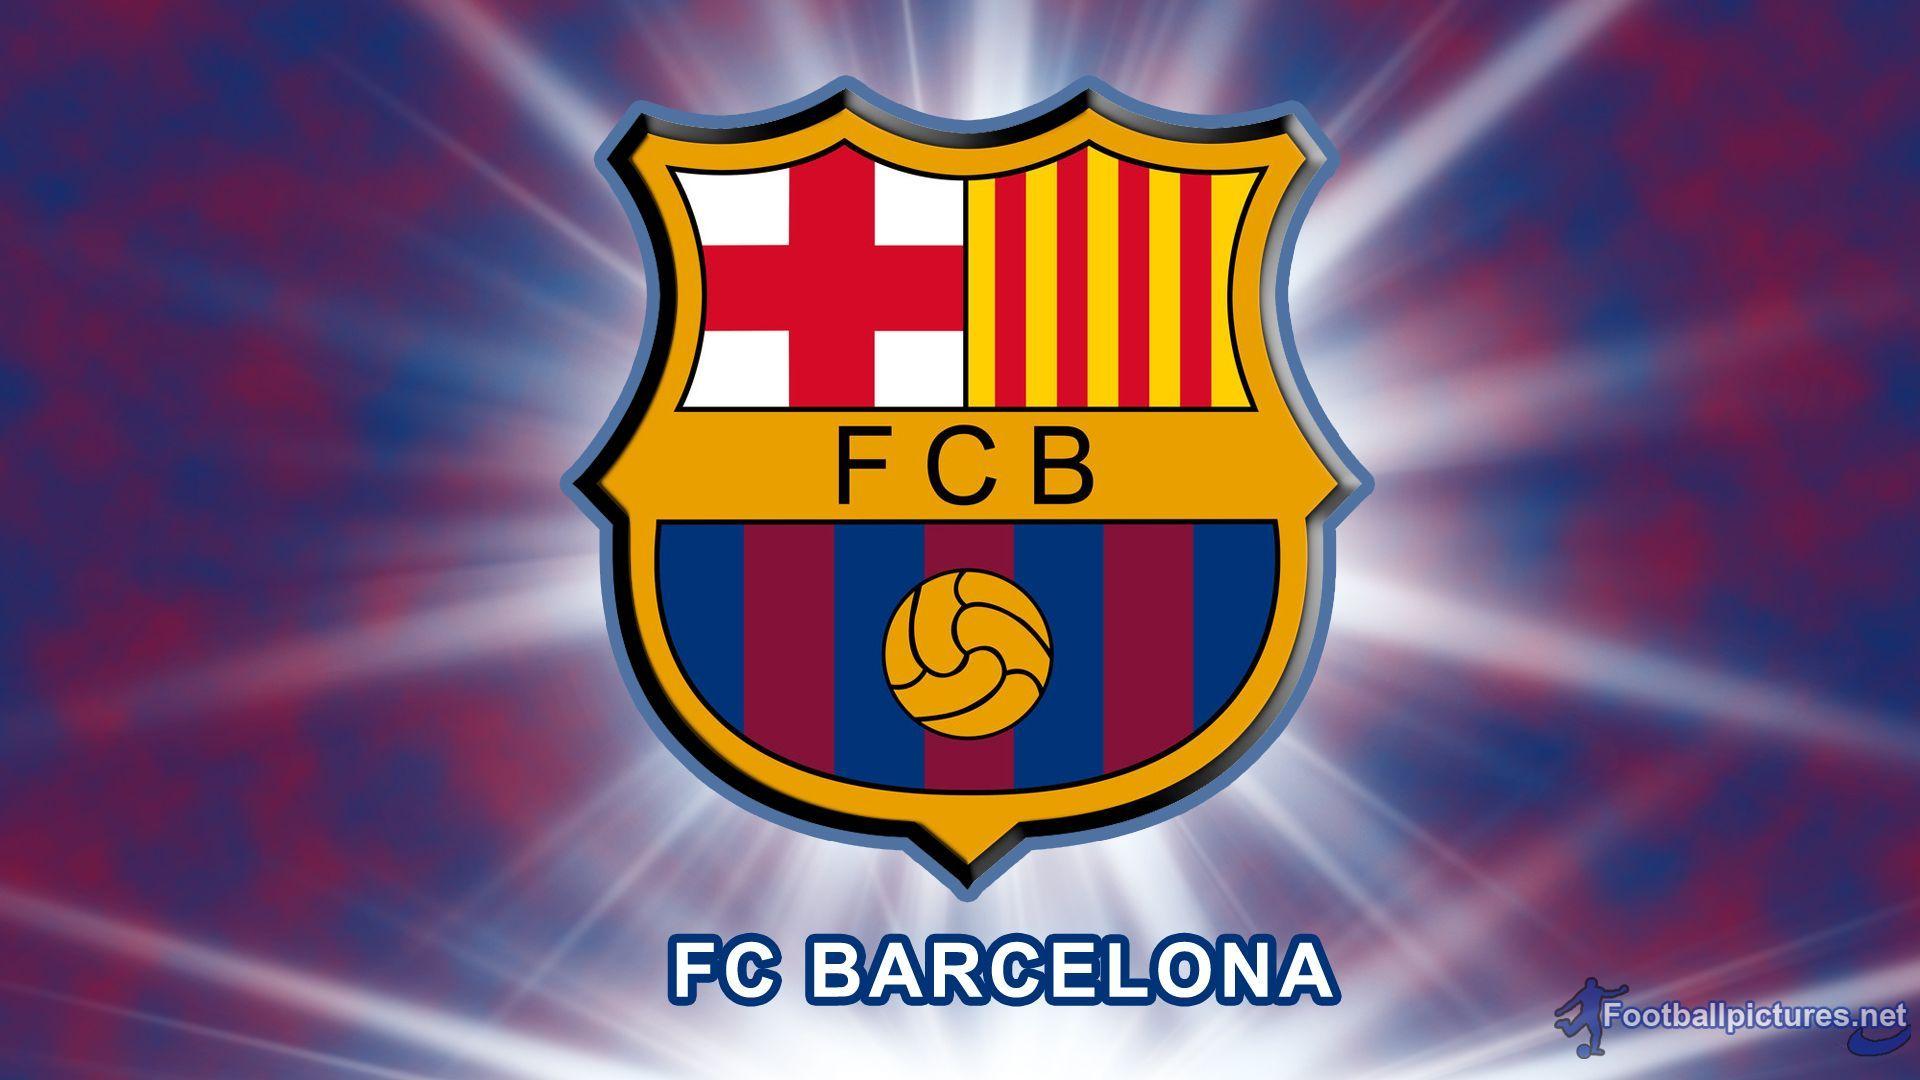 Barca Logo - Barca Logo 2015 | Barca Logo Wallpaper | Barca Logo Hd | Barca Team ...